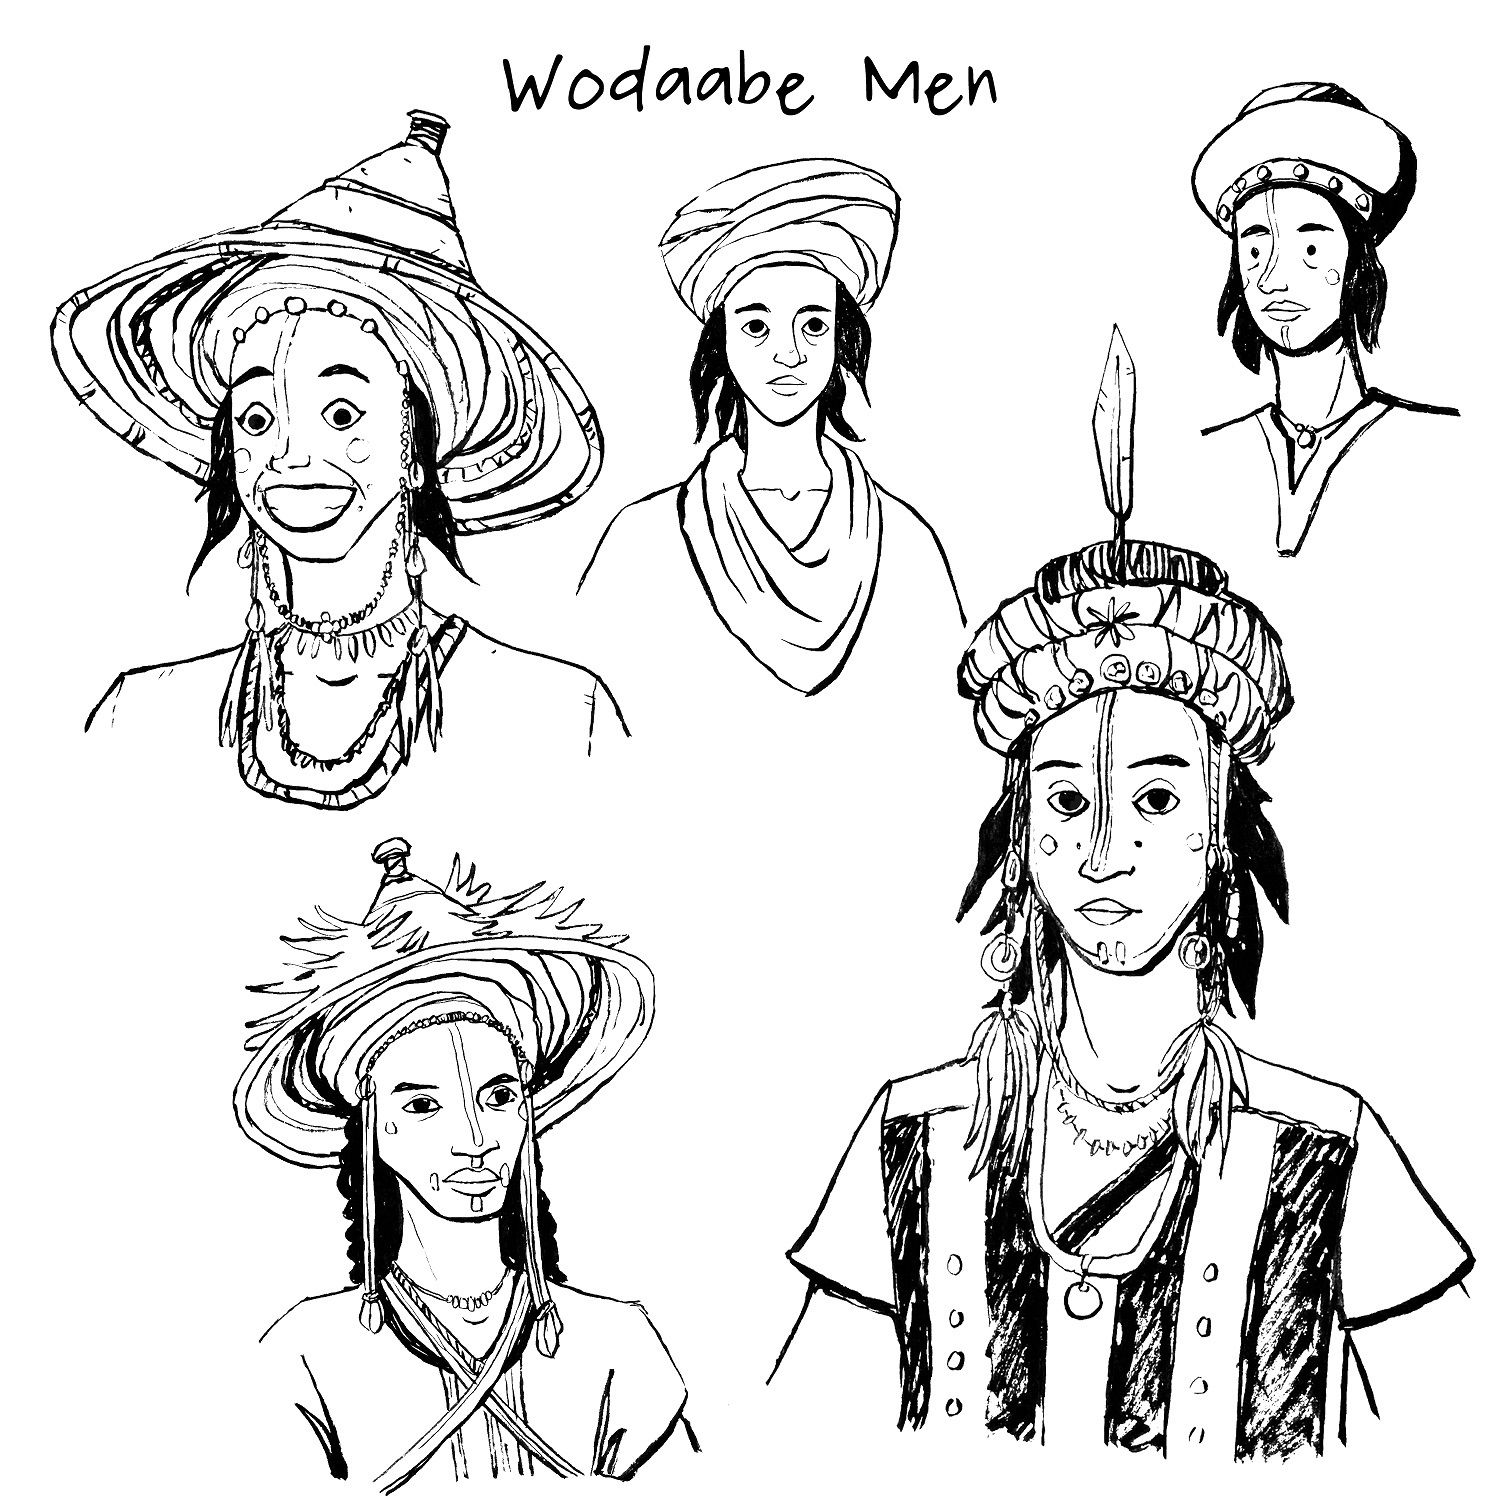 Wodaabe Men Ink Illustration